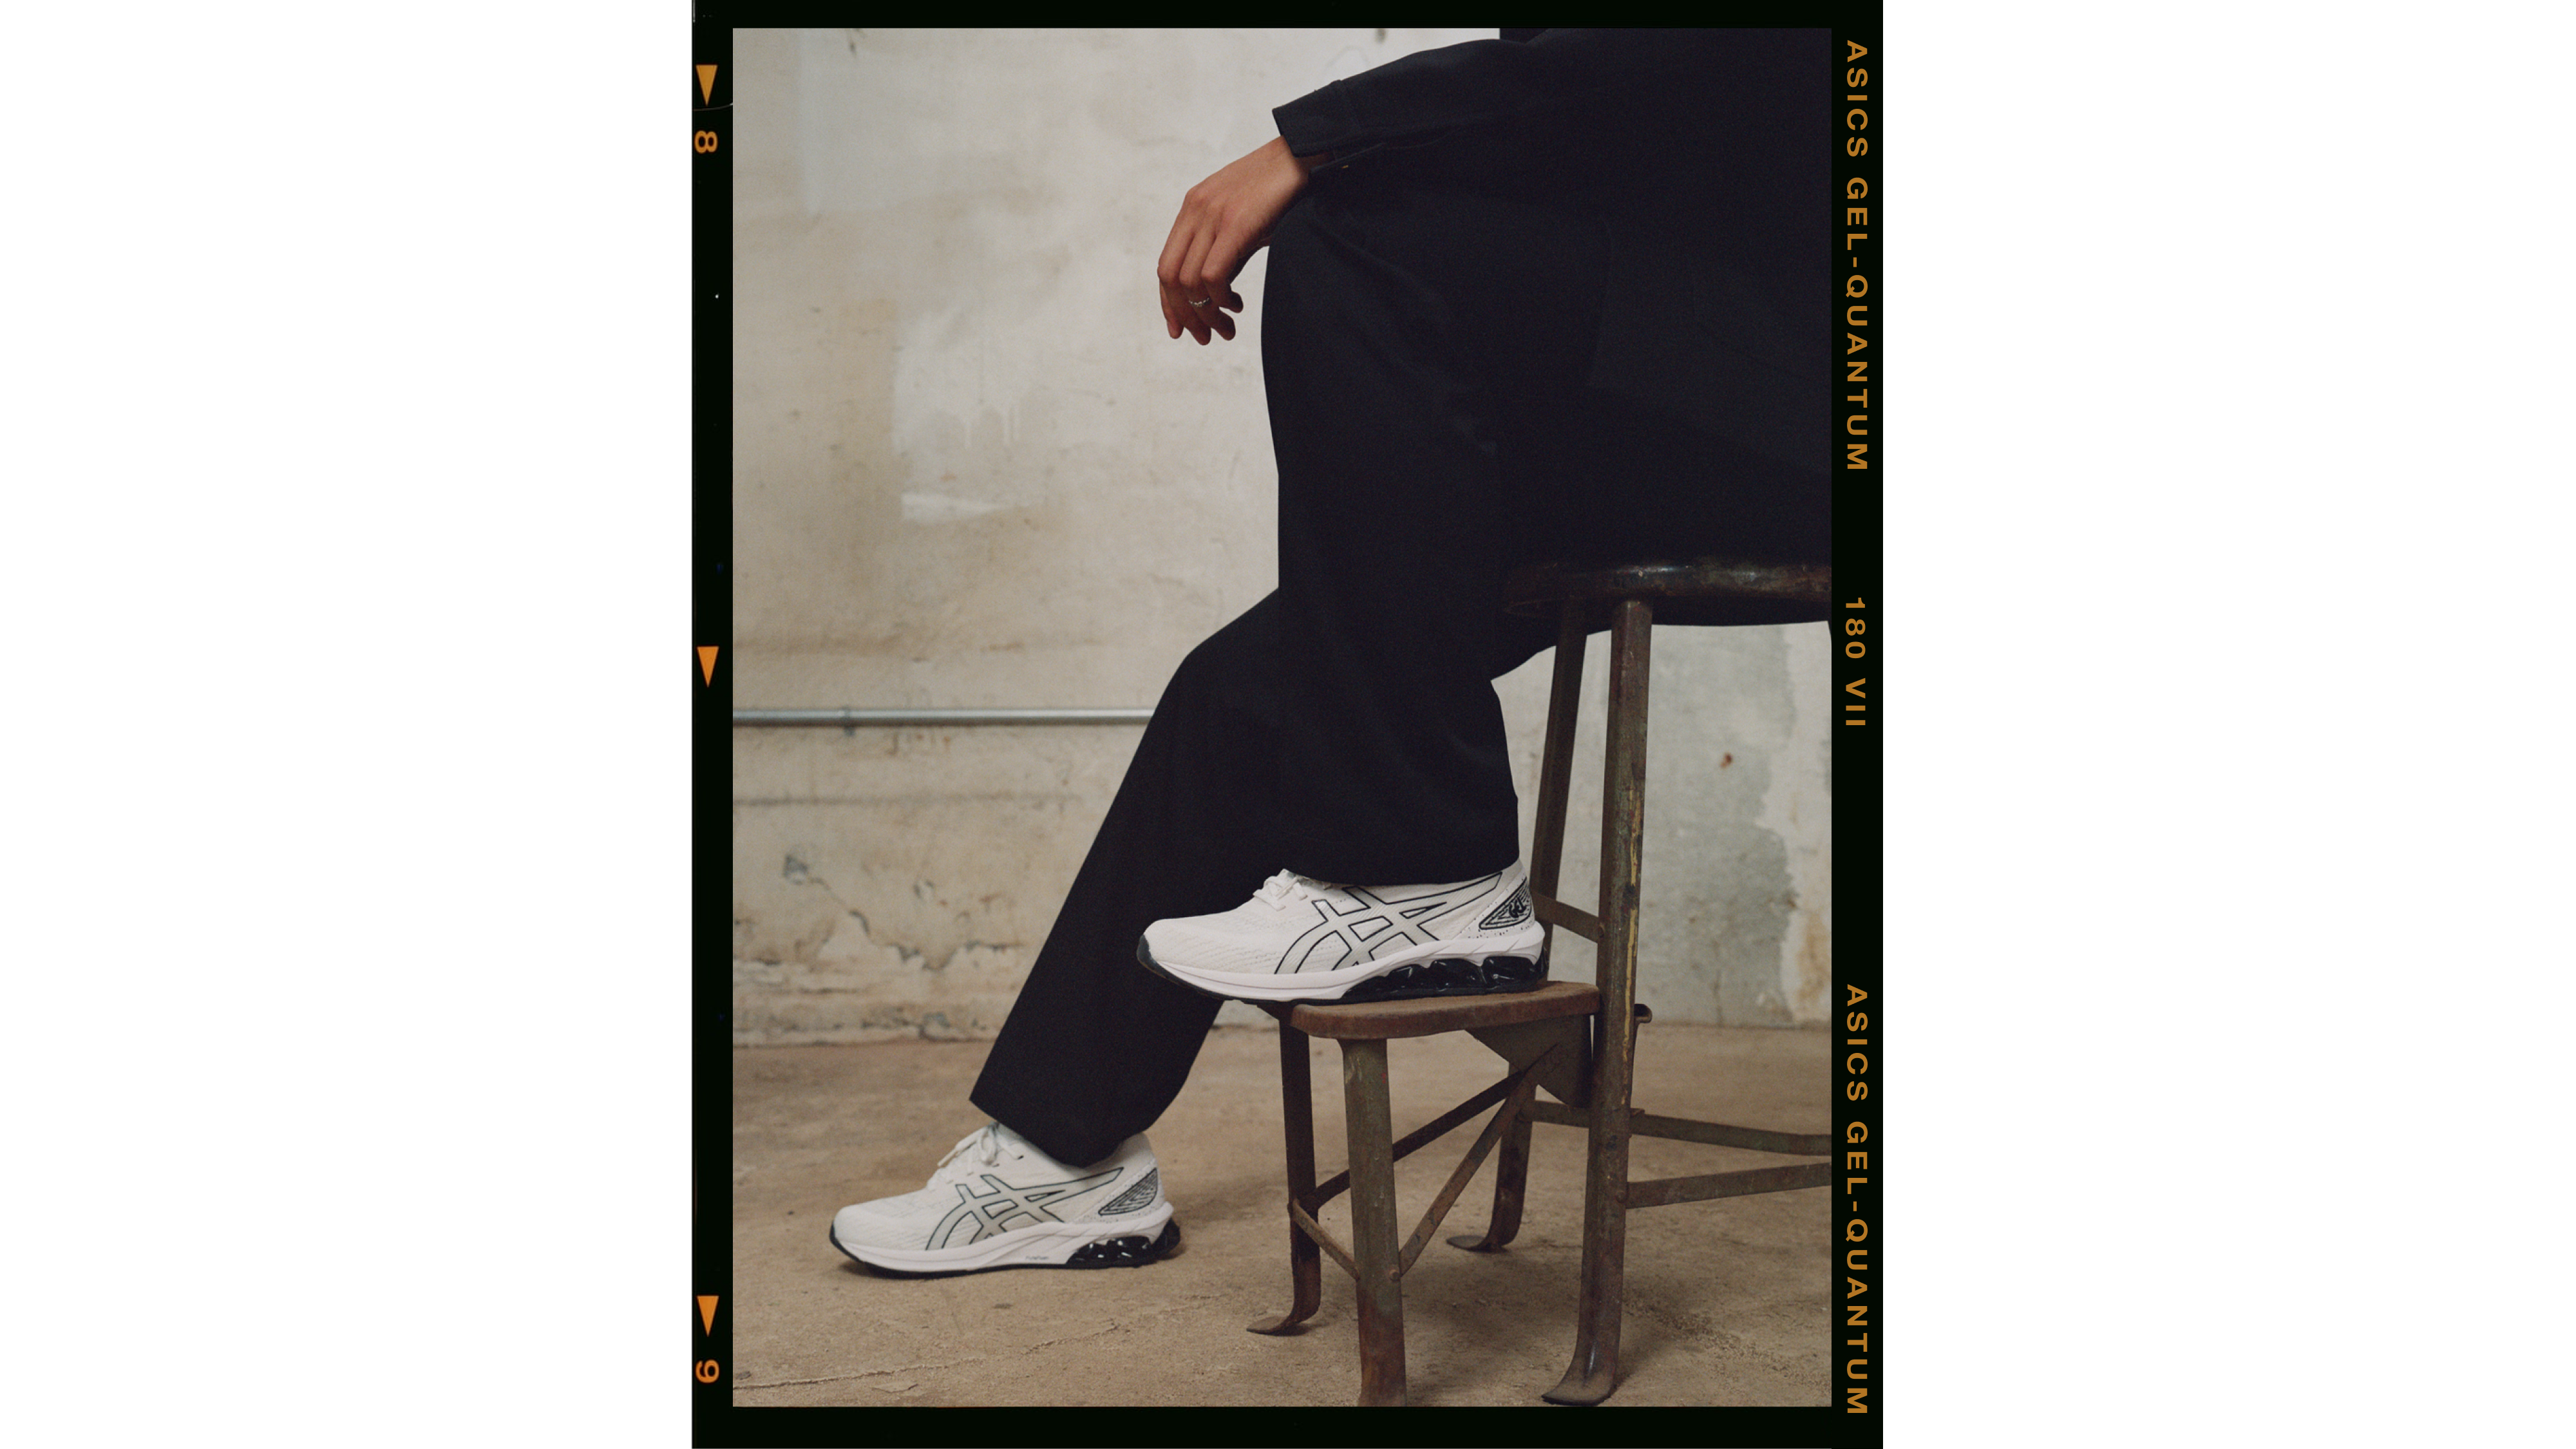 ASICS GEL-QUANTUM 180-VII Sneaker Release black sneaker